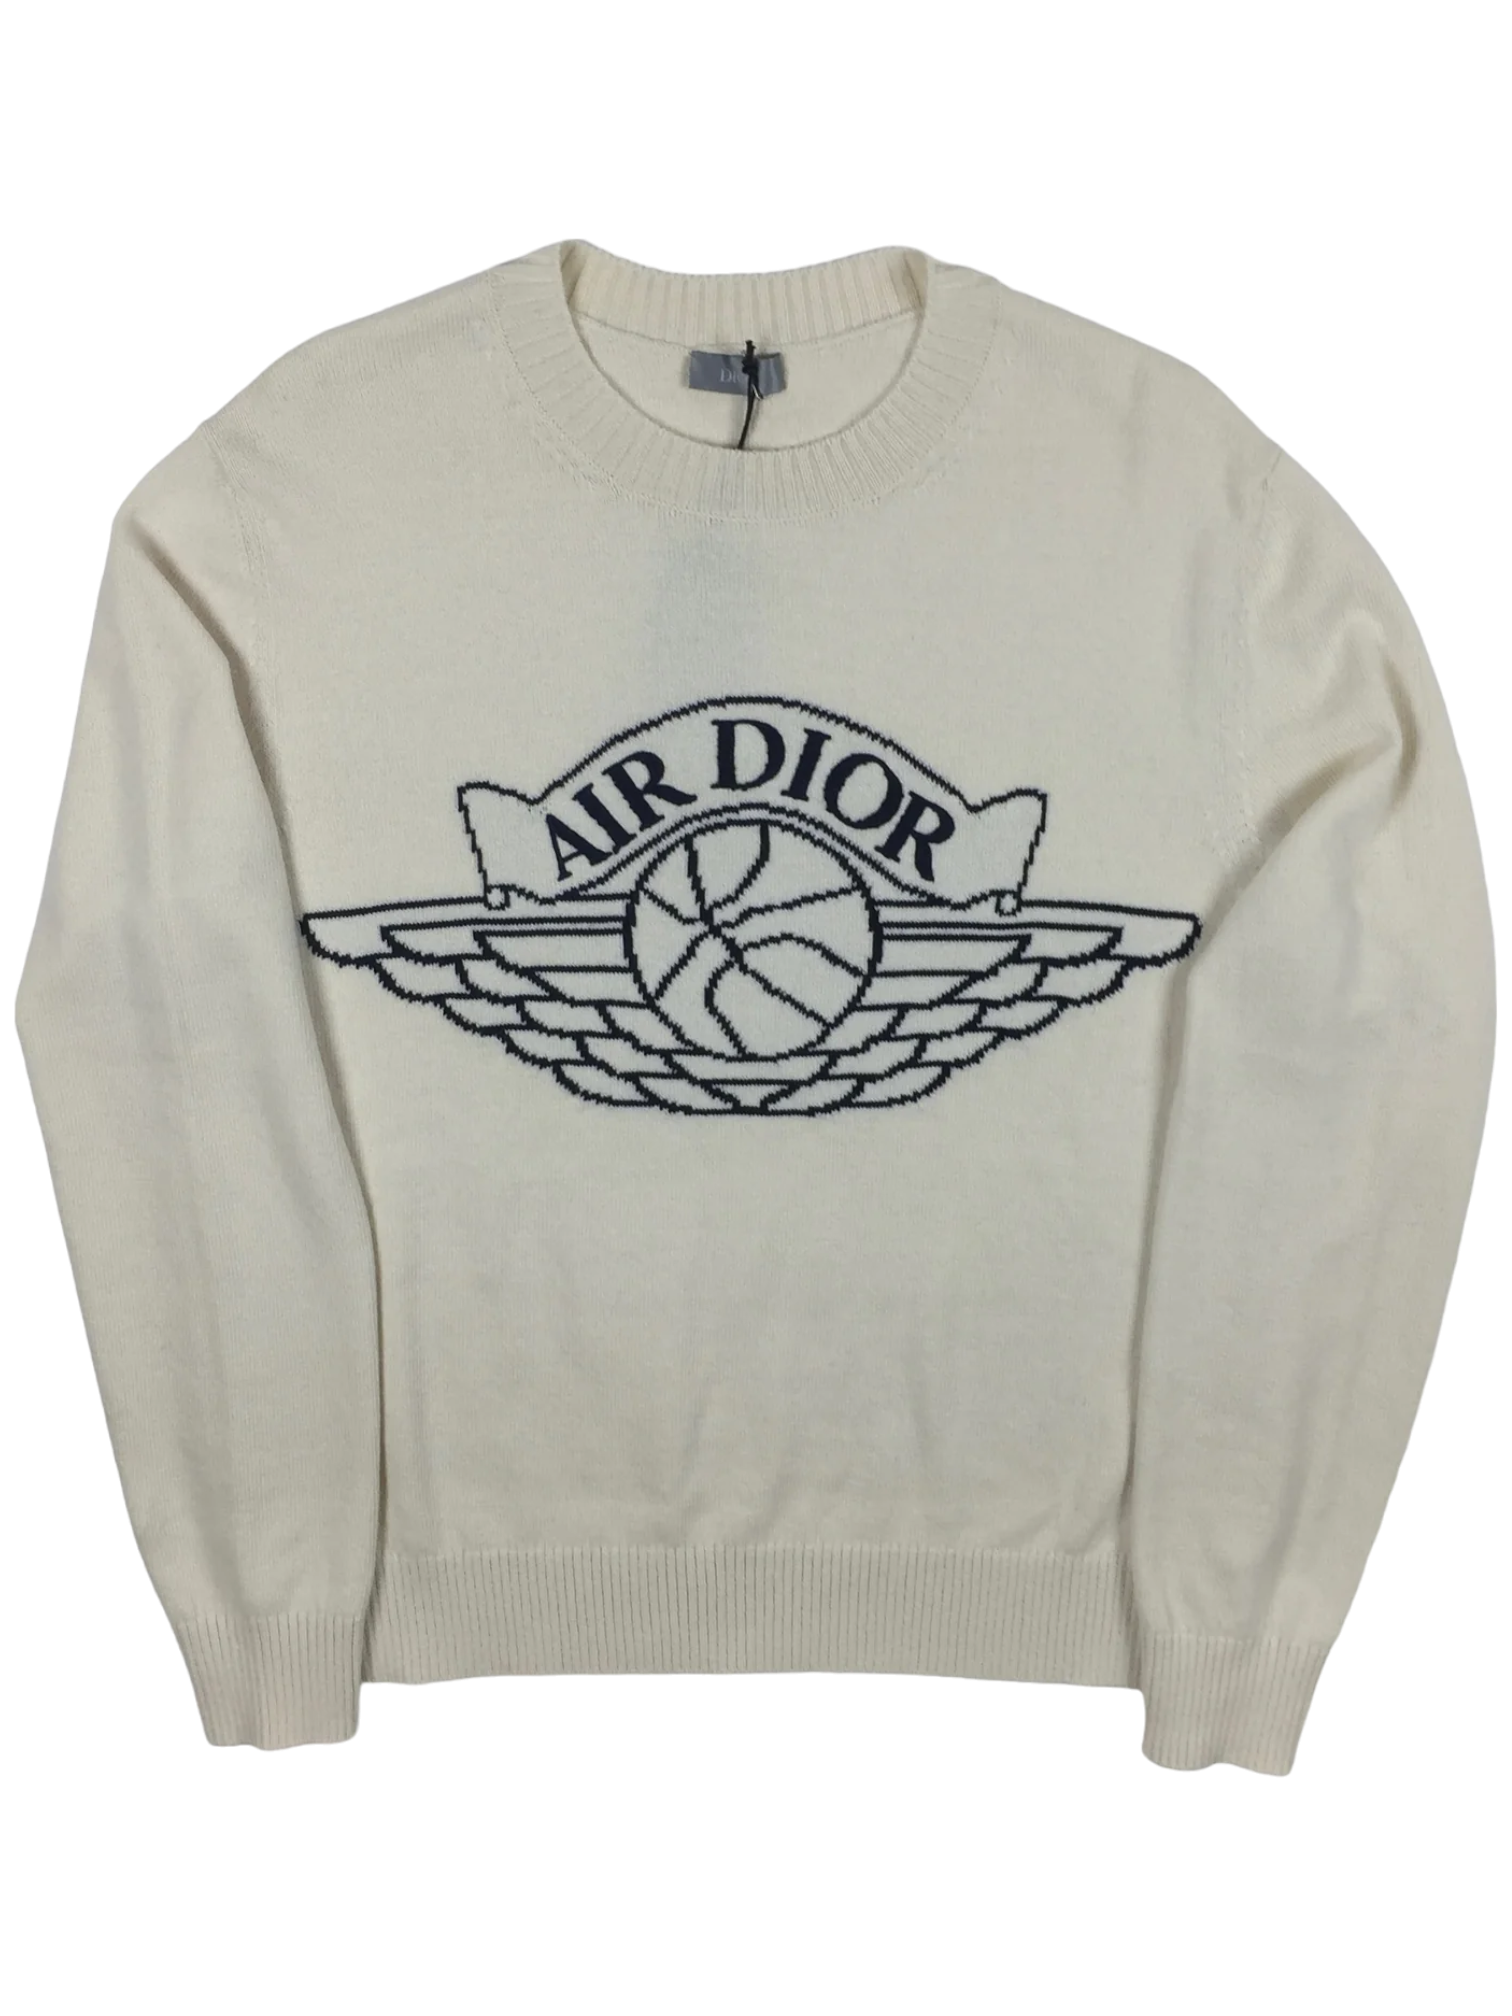 Dior x Air Jordan Cream Knit Cashmere Crewneck